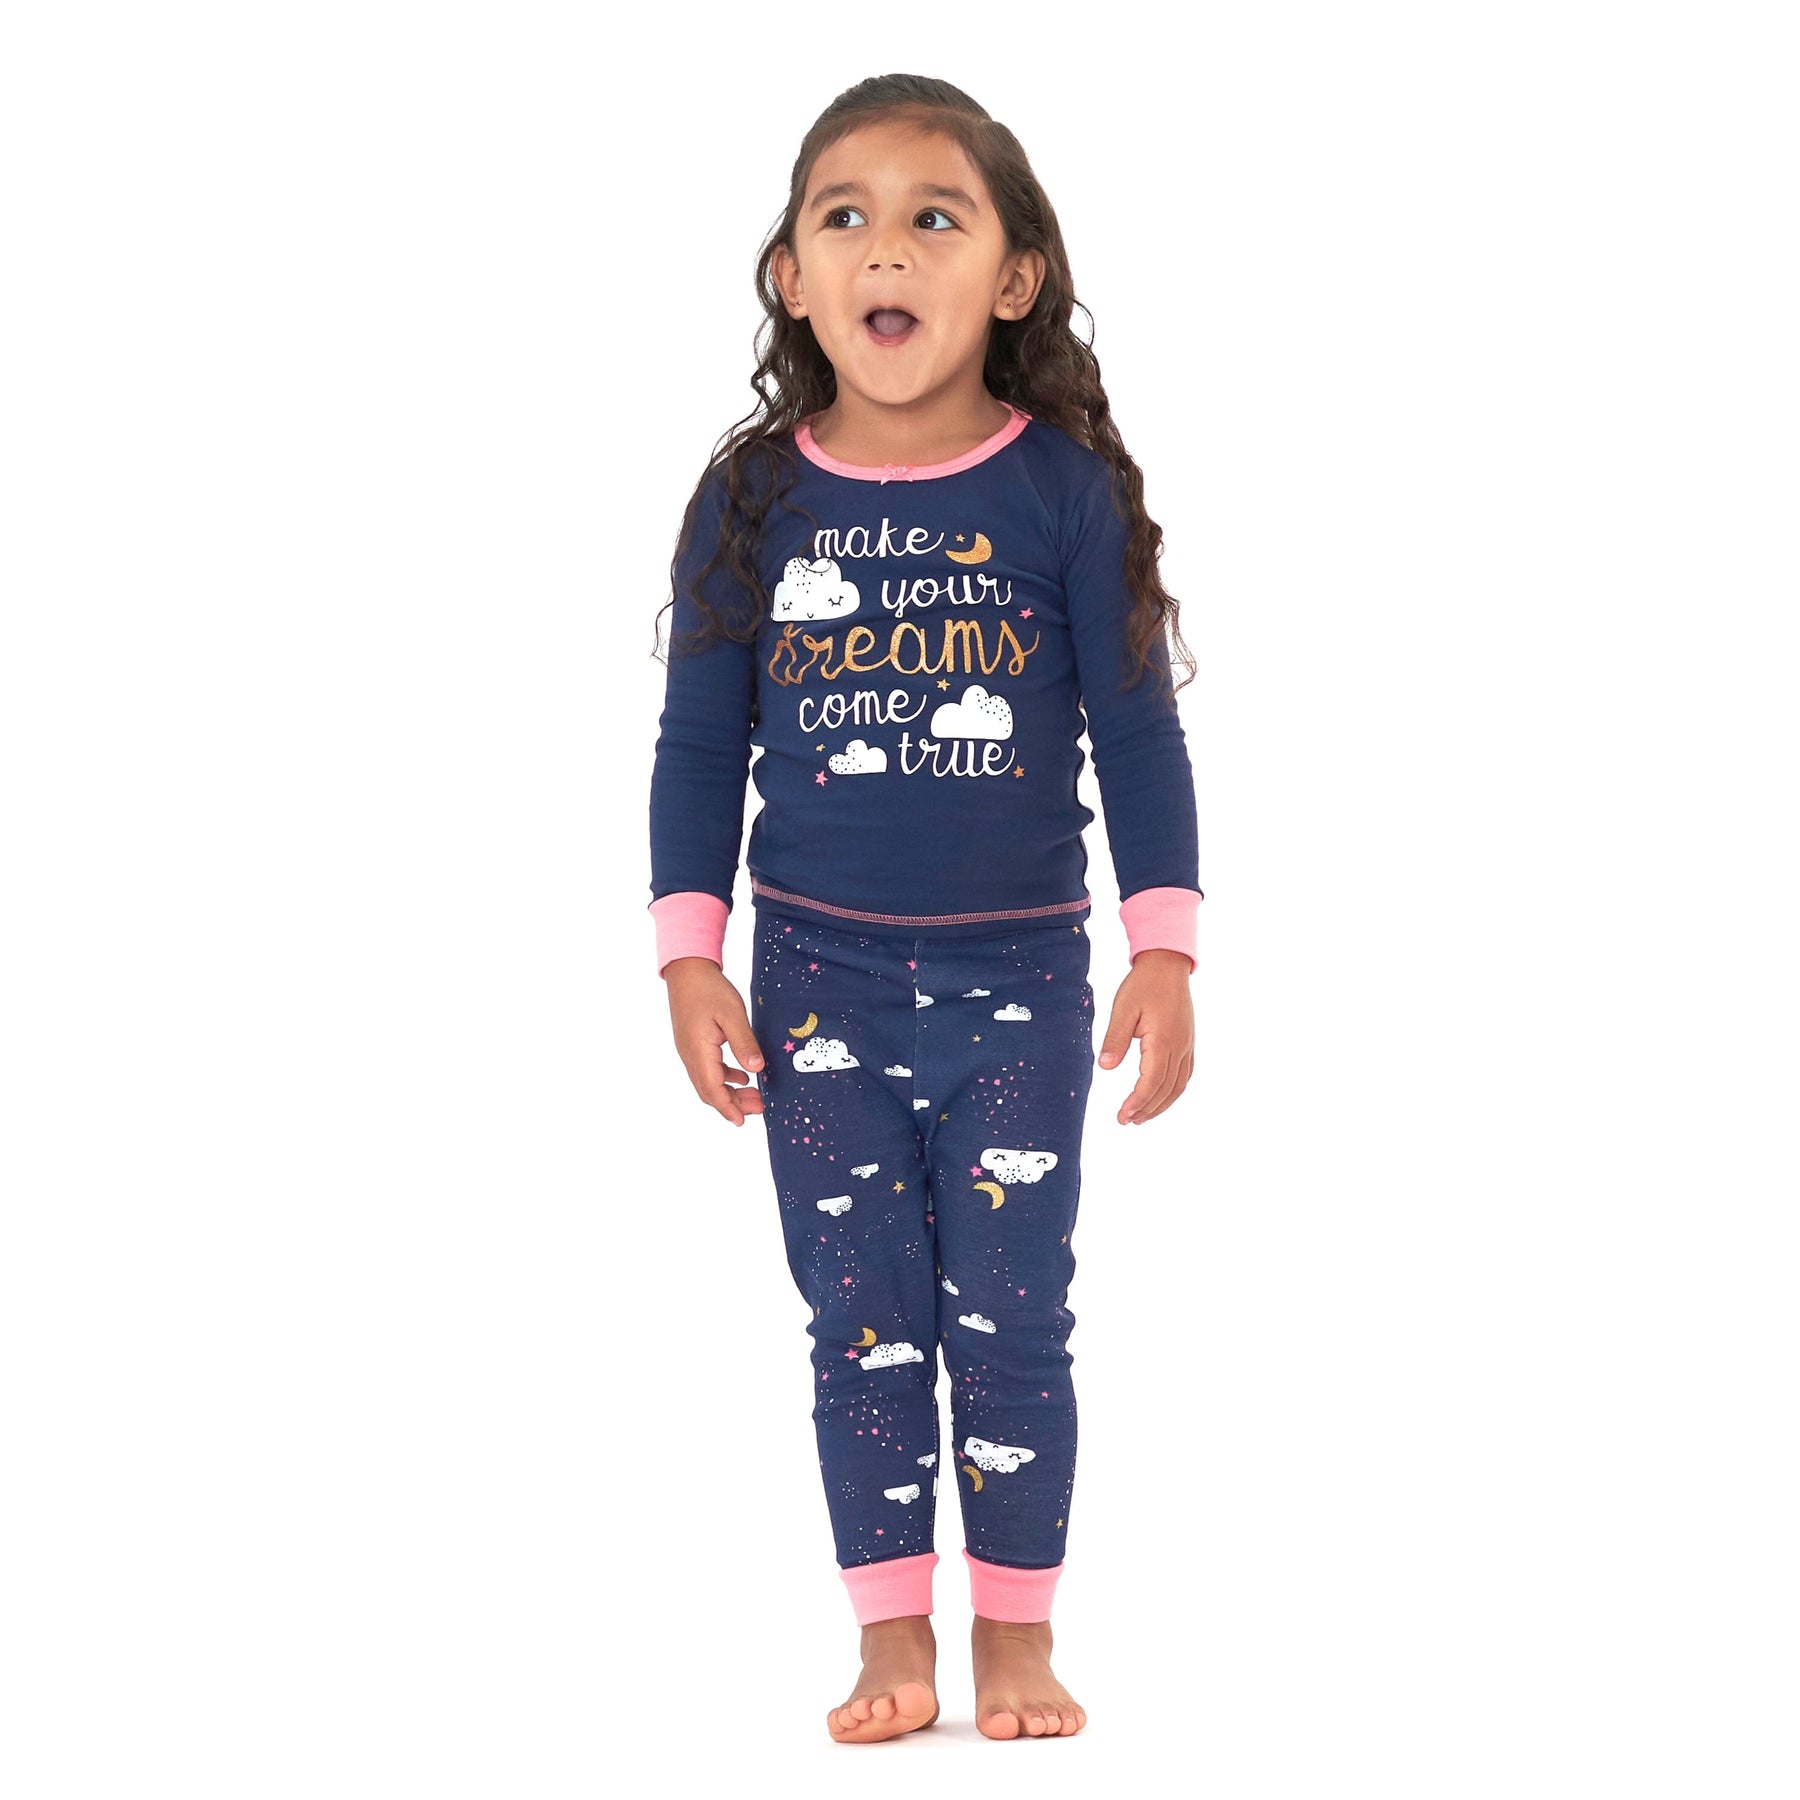 Essentials Unisex Babies, Toddlers and Kids' Snug-Fit Cotton Pajama  Sleepwear Sets